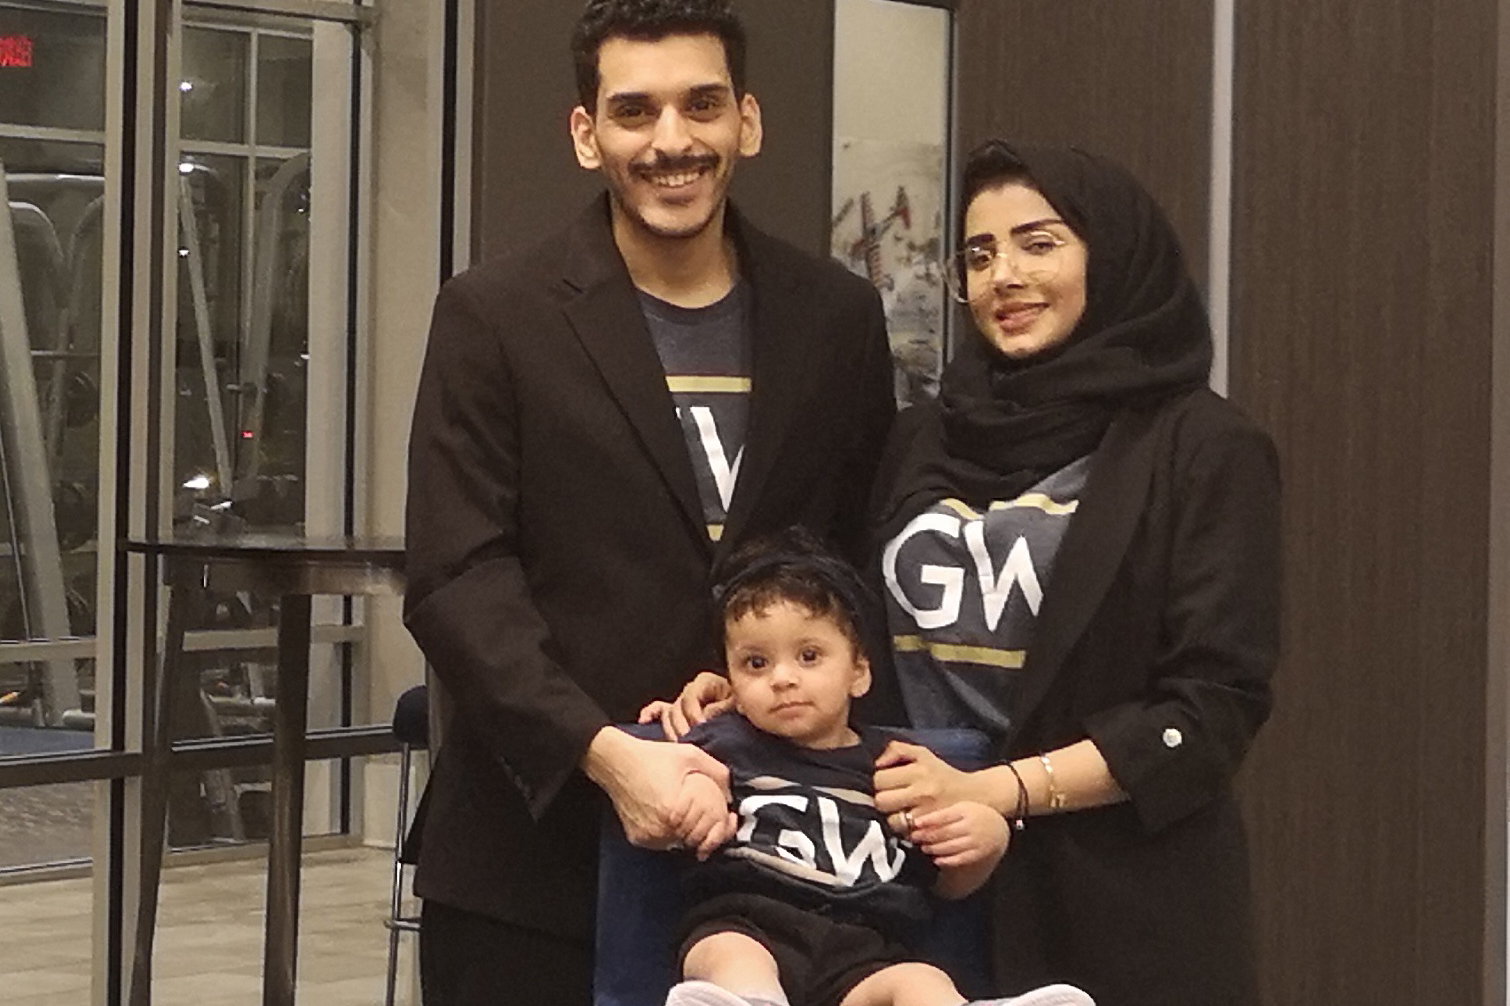 Mohamad Alahdal, Rahaf Alamoudi and their daughter Ayla sporting GW gear. (Courtesy Rahaf Alamoudi)